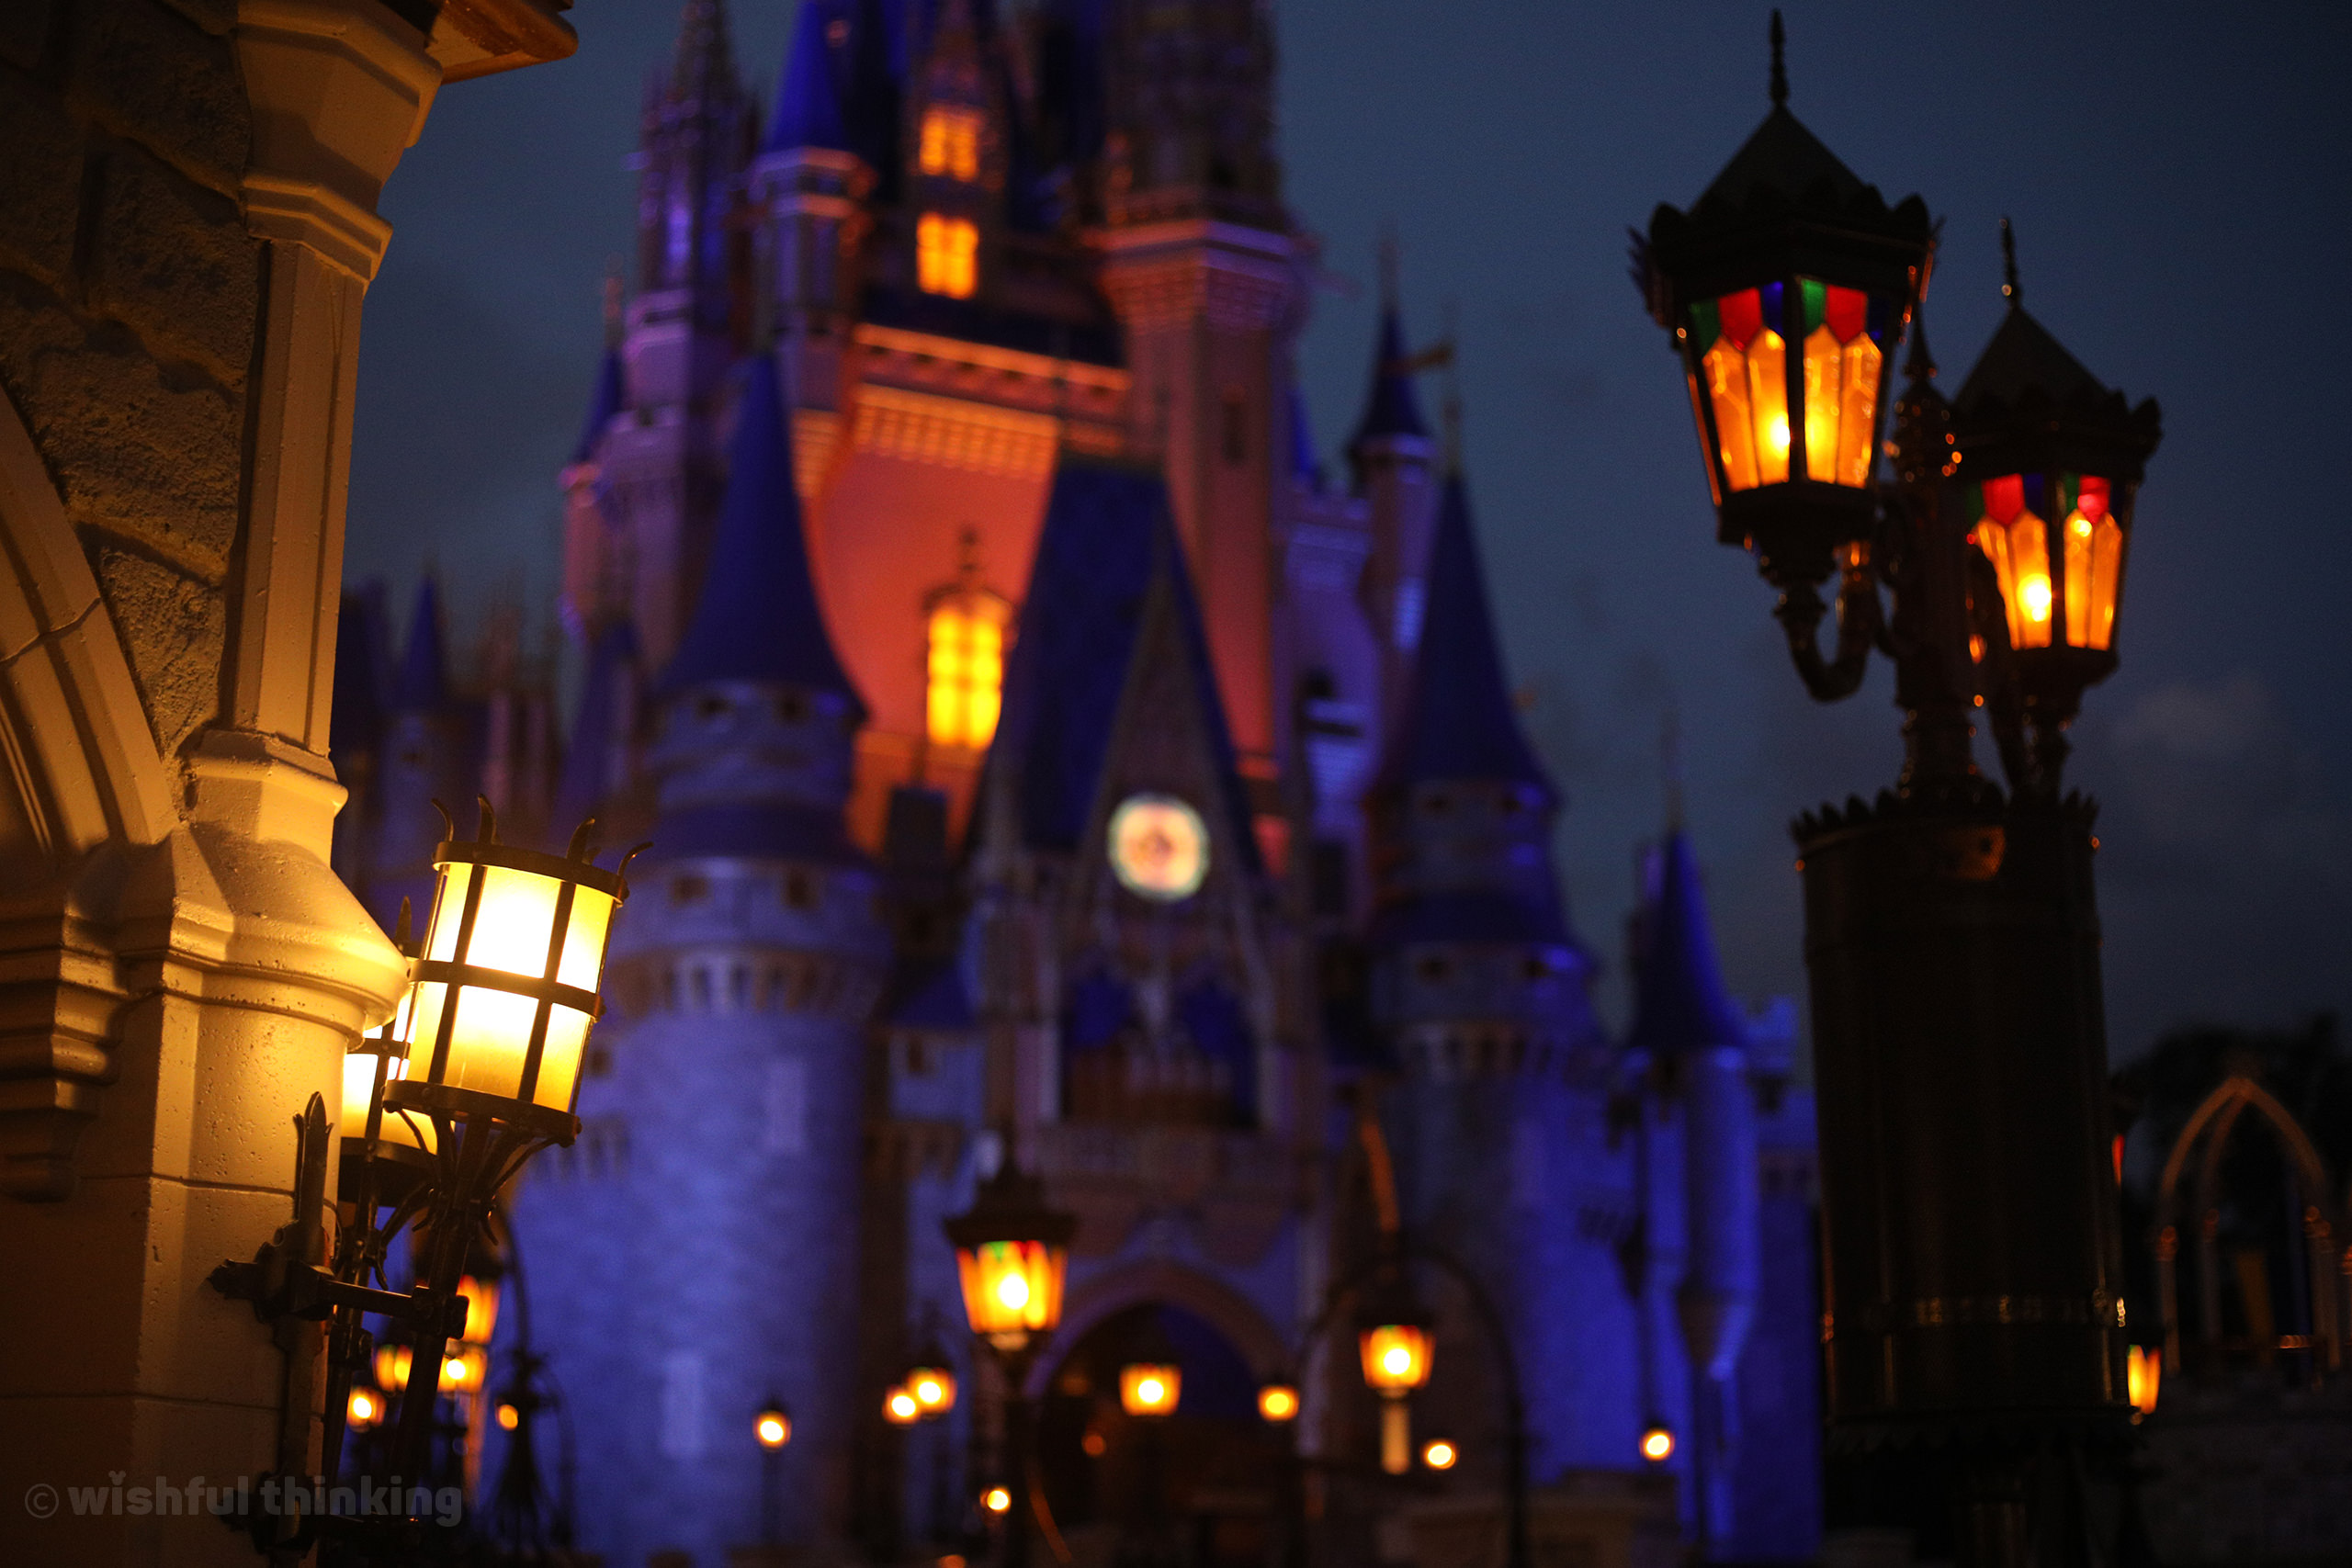 A nighttime glow of Cinderella Castle at the Walt Disney World Magic Kingdom theme park in Orlando, Florida